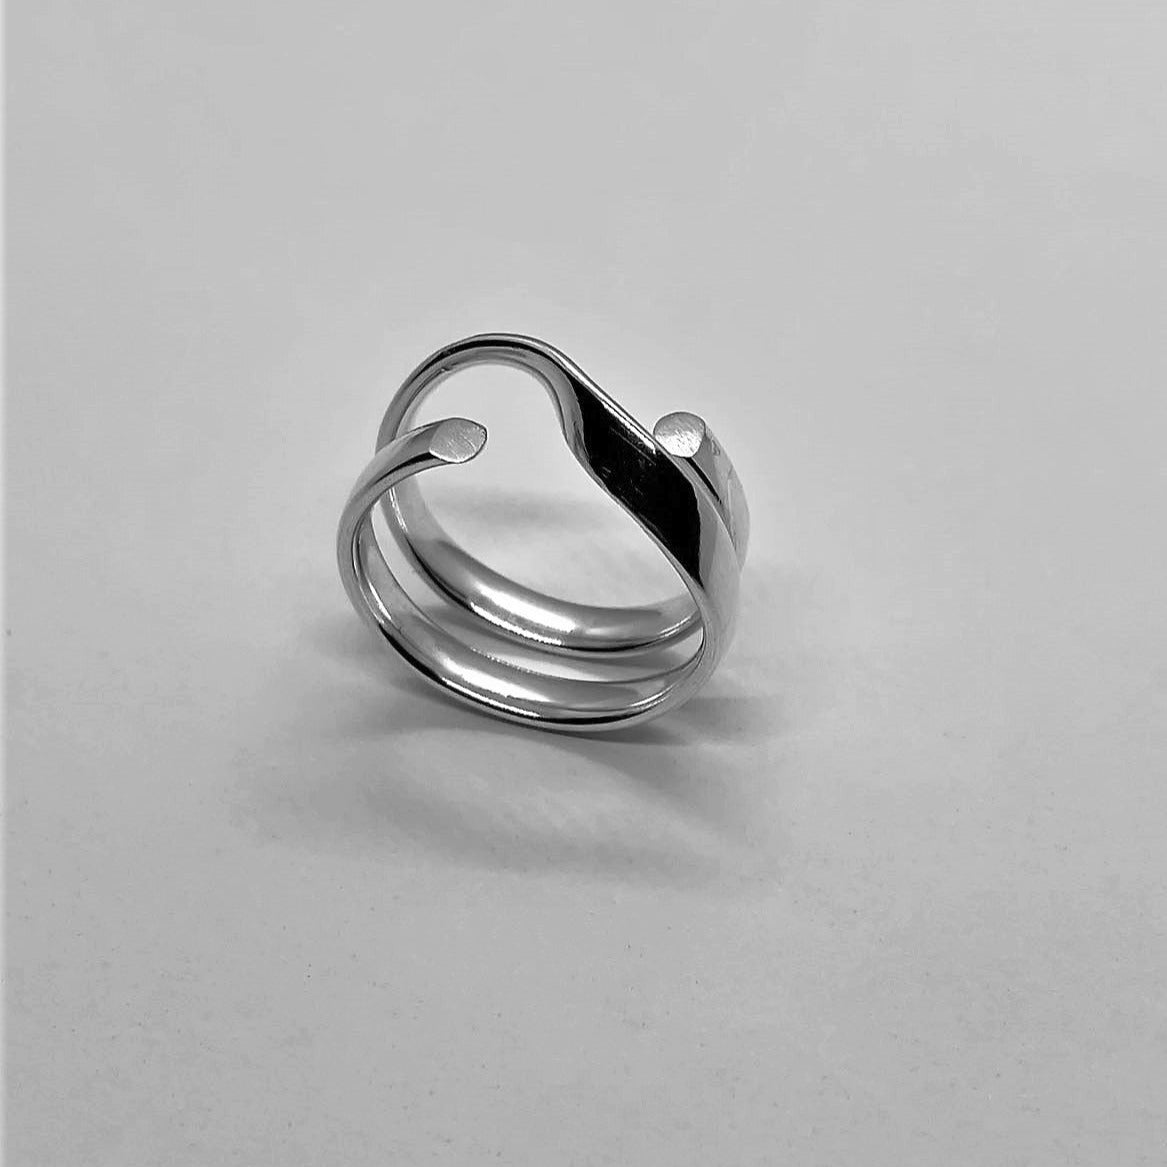 Möbius ring